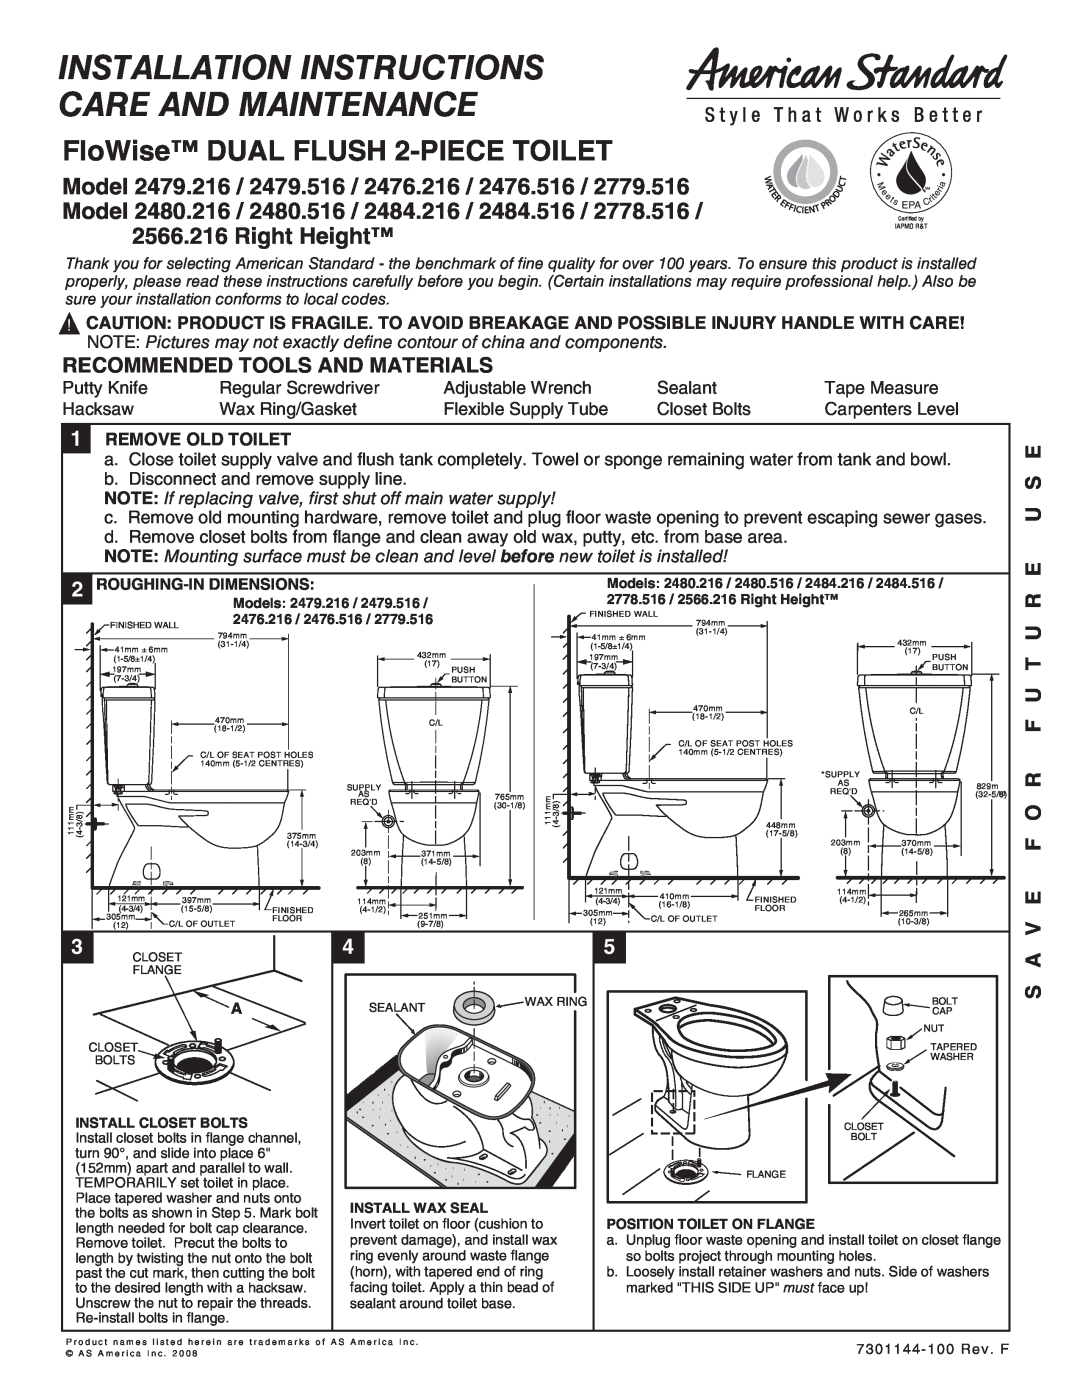 American Standard 2778.516 installation instructions Recommended Tools And Materials, S A V E F O R F U T U R E U S E 